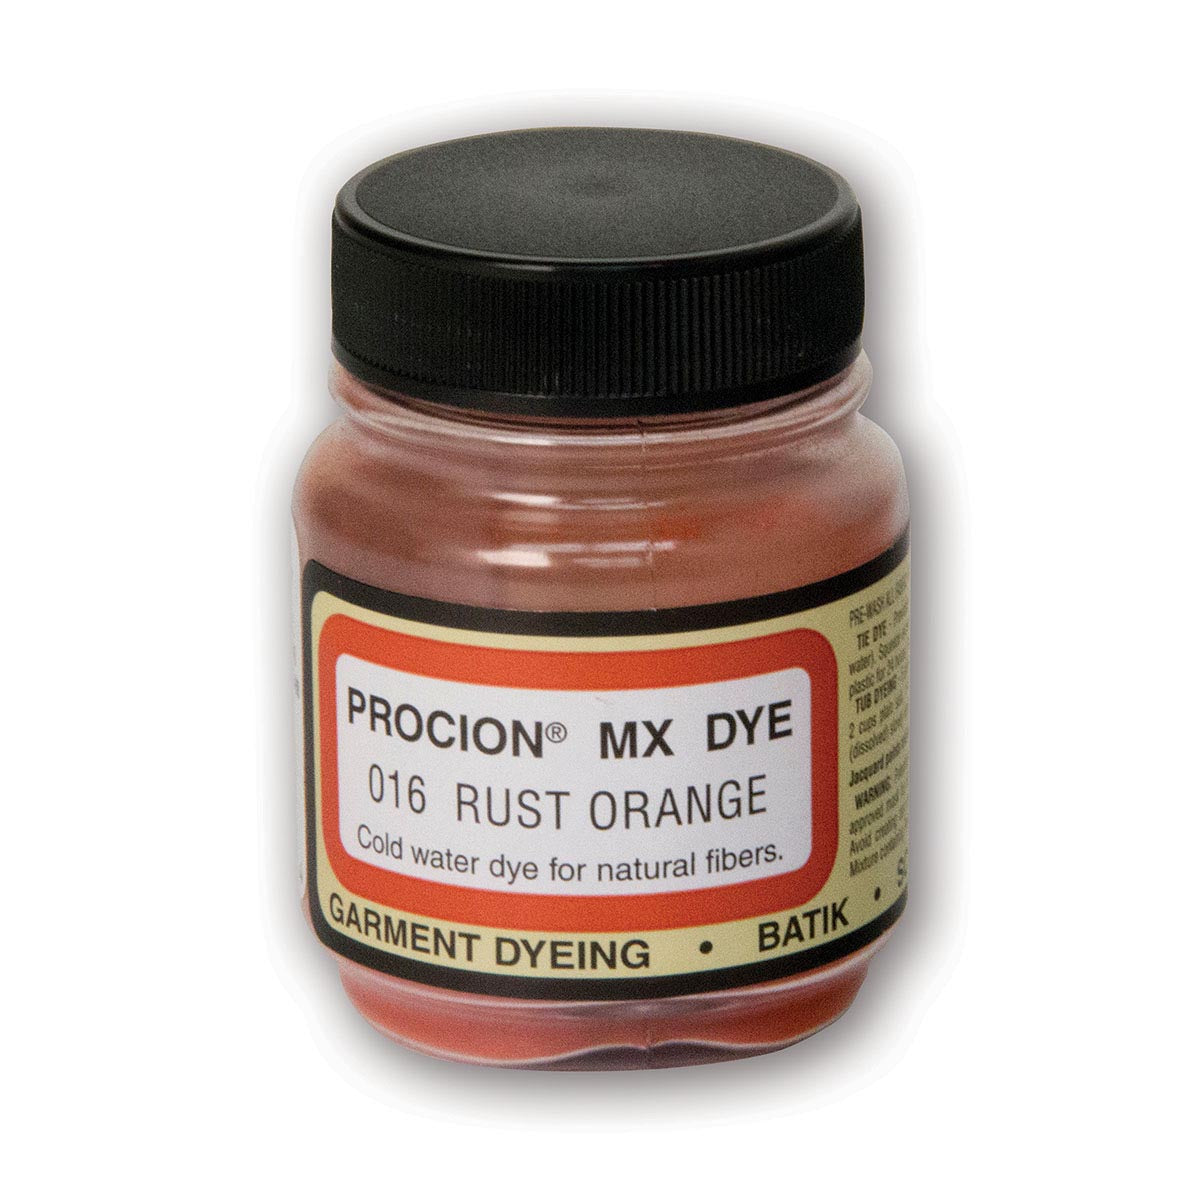 Jacquard - Procion MX Dye - Tissu Textile - Orange Rouille 016